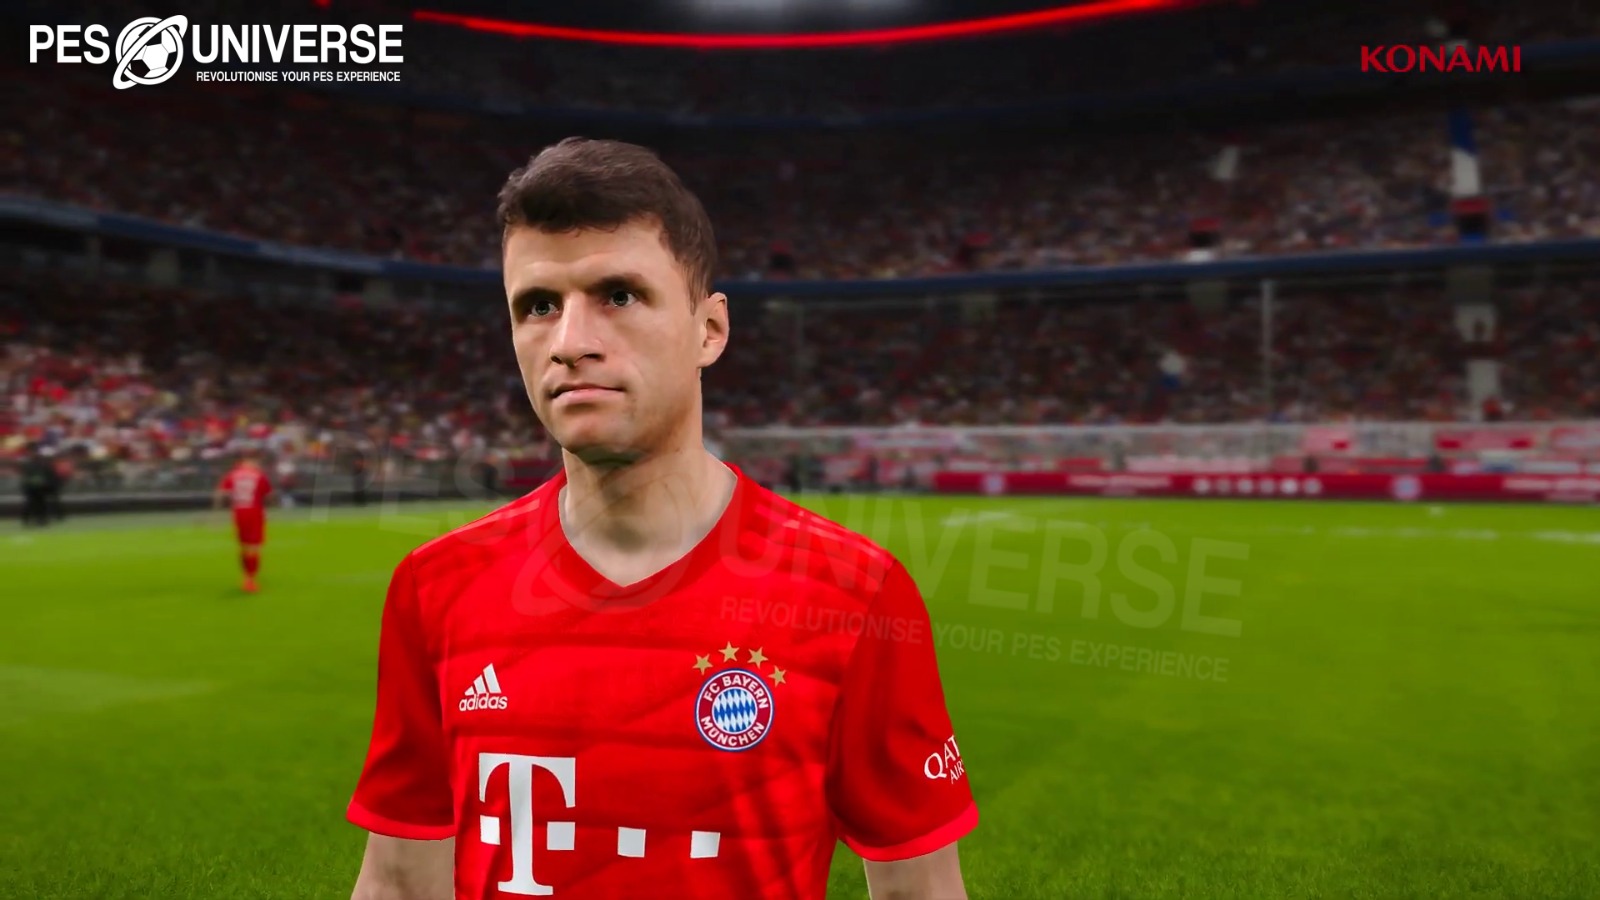 eFootball PES 2020 Bayern Munich Trailer e imágenes | PES Universe